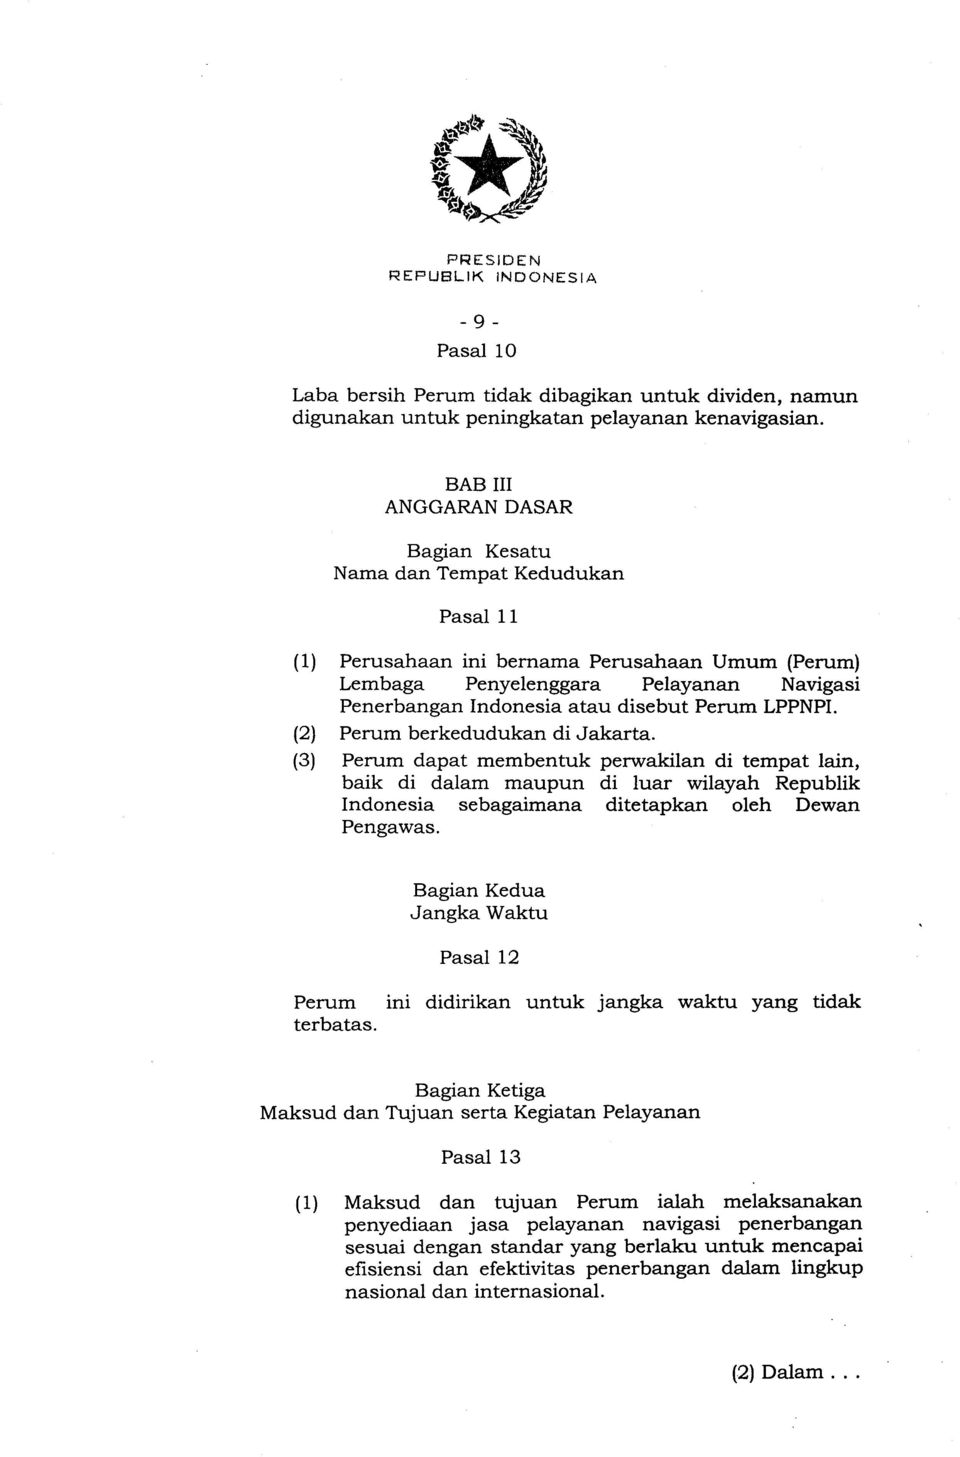 LPPNPI. (2) Perum berkedudukan di Jakarta. (3) Perum dapat membentuk perwakilan di tempat lain, baik di dalam maupun di luar wilayah Republik Indonesia sebagaimana ditetapkan oleh Dewan Pengawas.